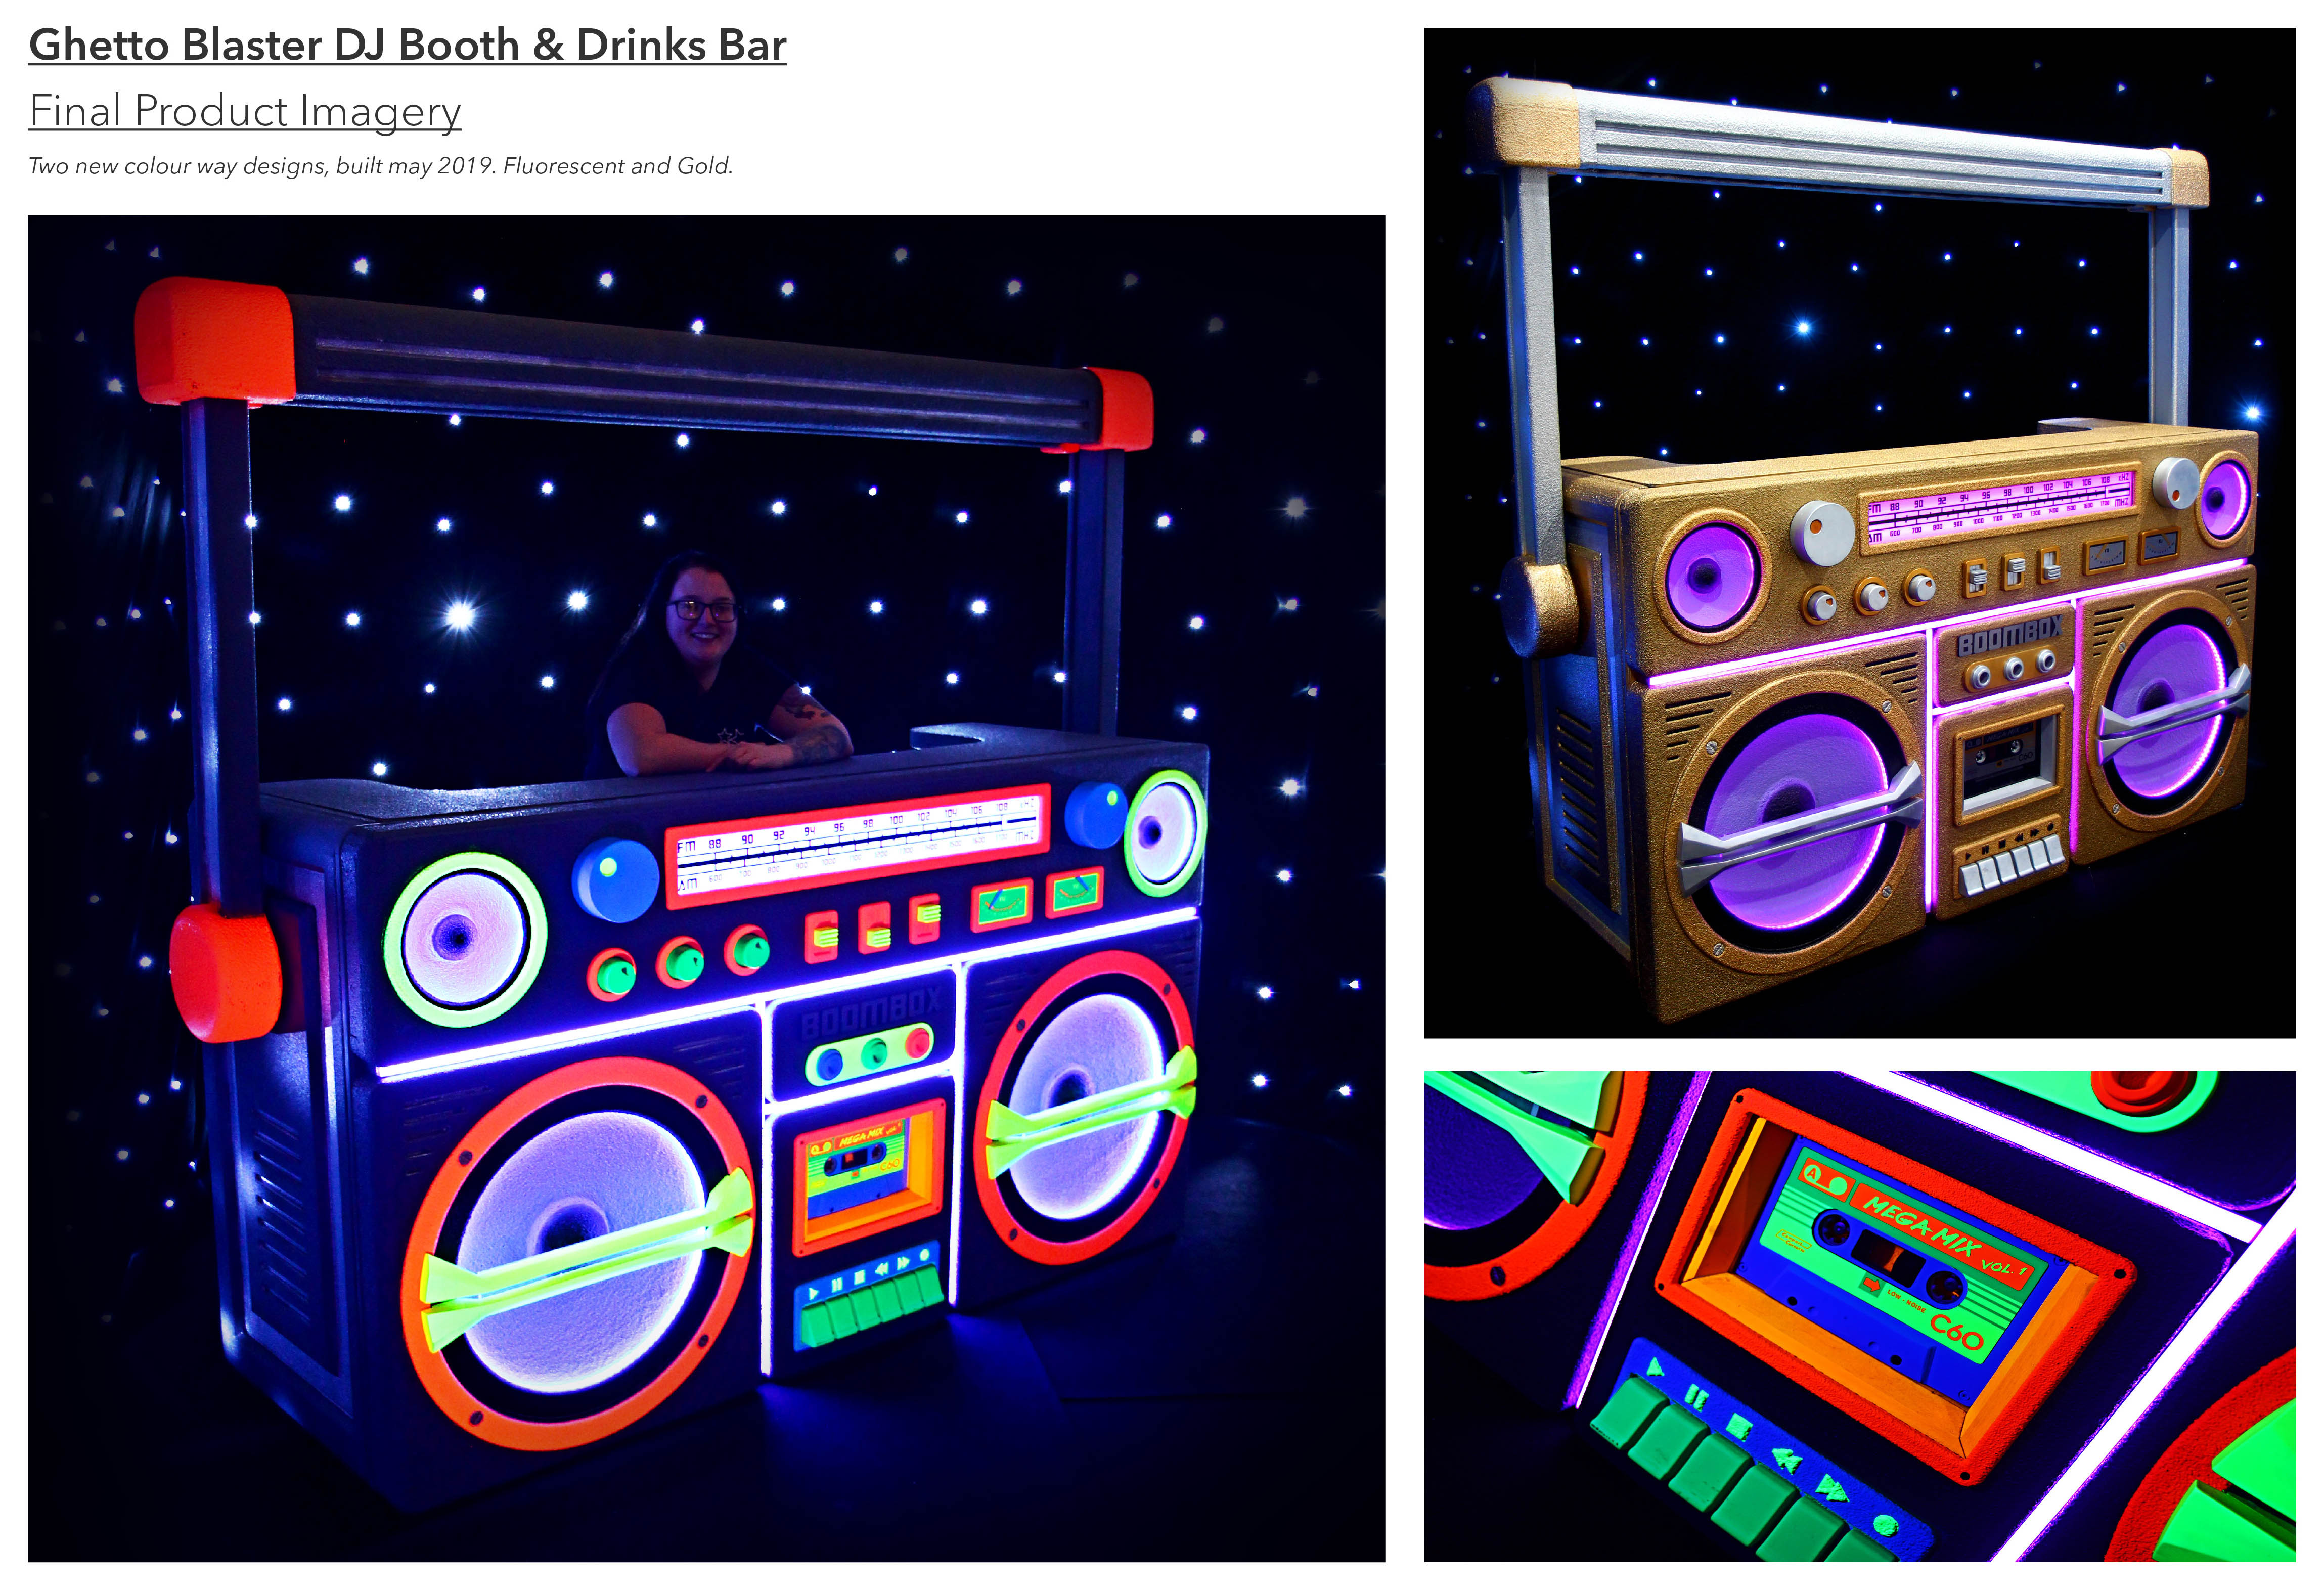 MUSE Design Winners - 'Boombox' - Themed DJ Booth & Drinks Bar